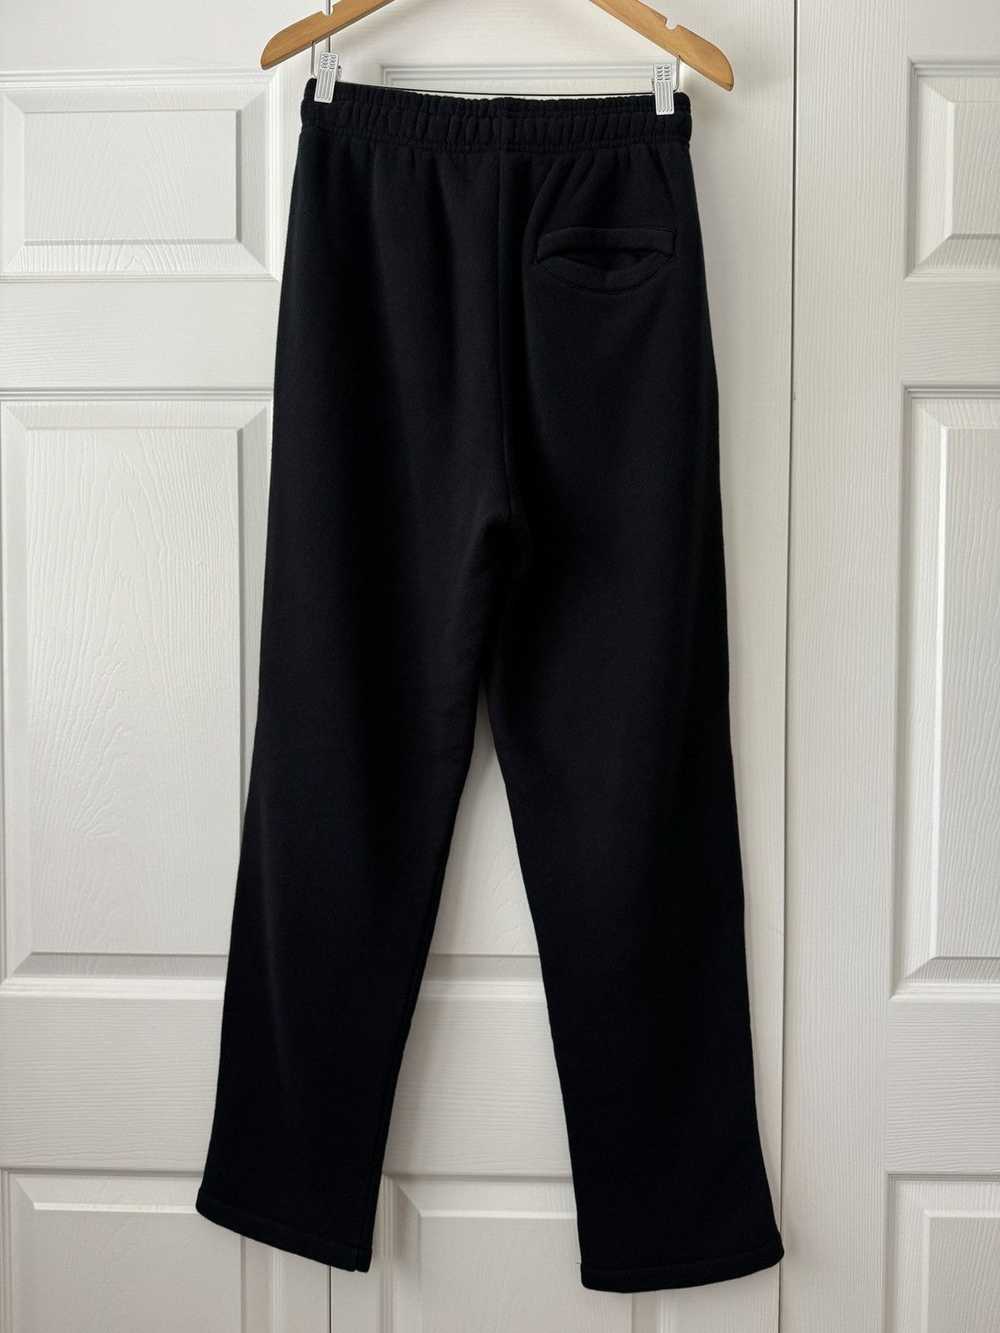 Eric Emanuel Eric Emanuel Basic Black Sweatpants - image 3